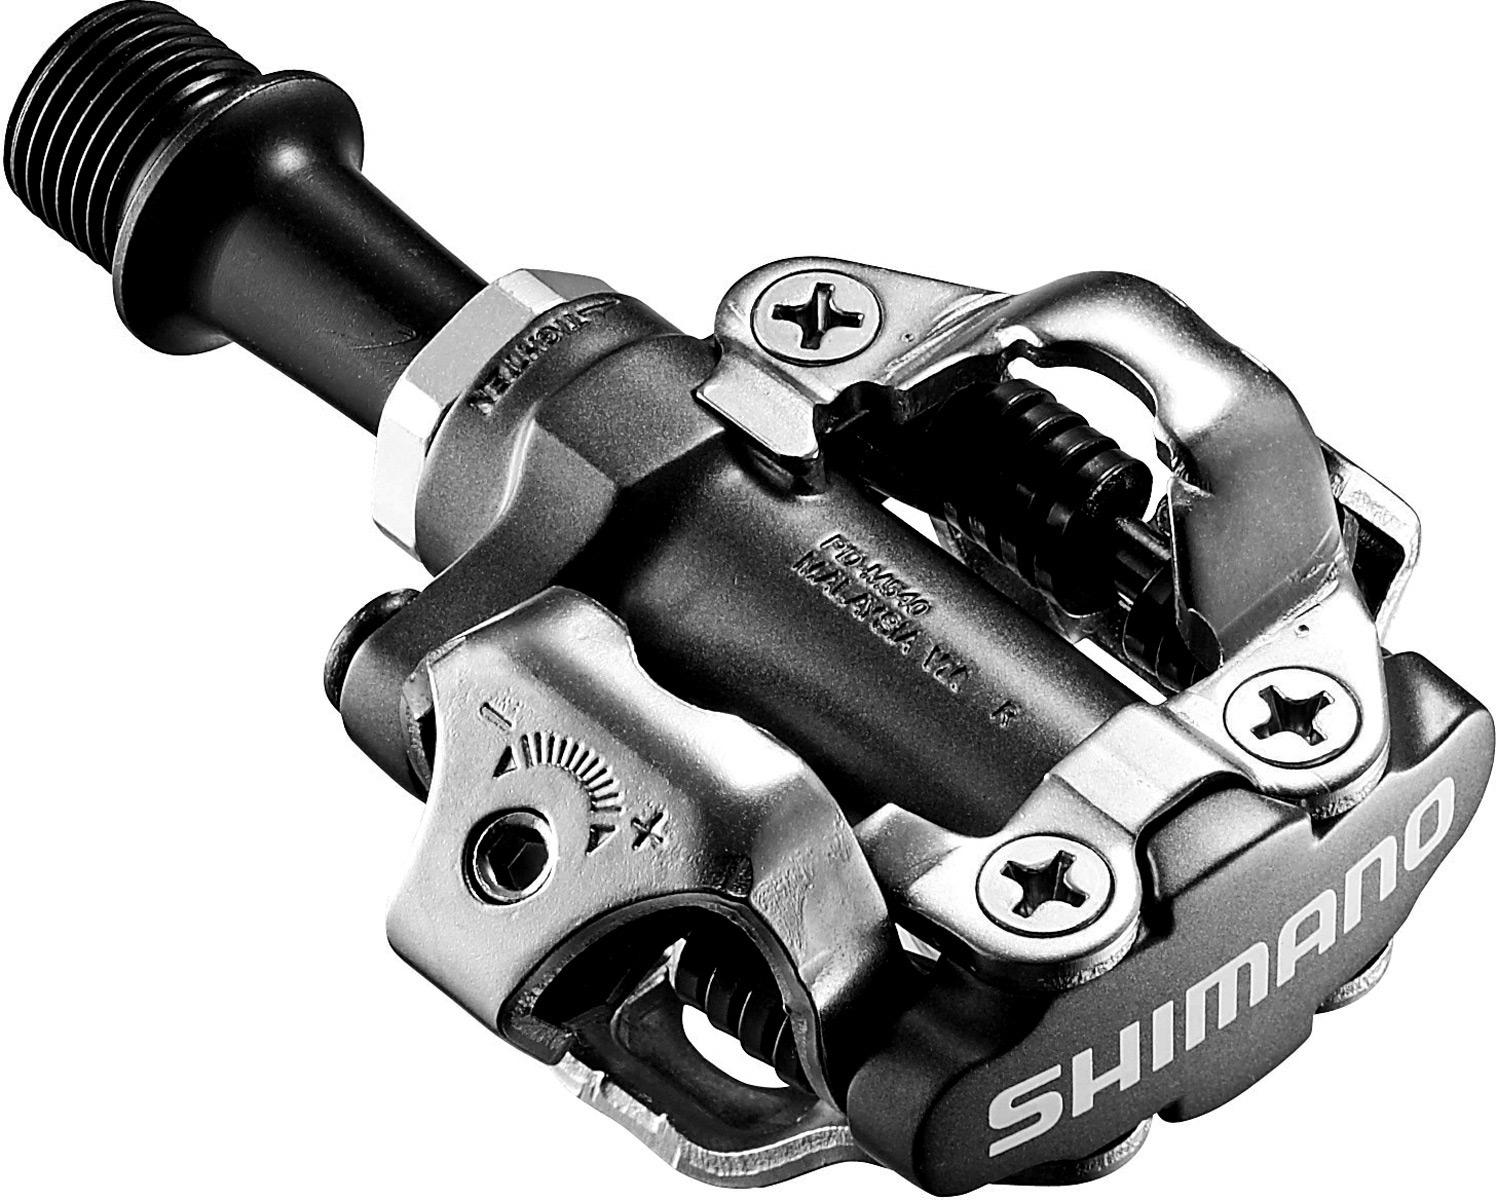 Shimano M540 Mountain Bike Spd Pedals  Black